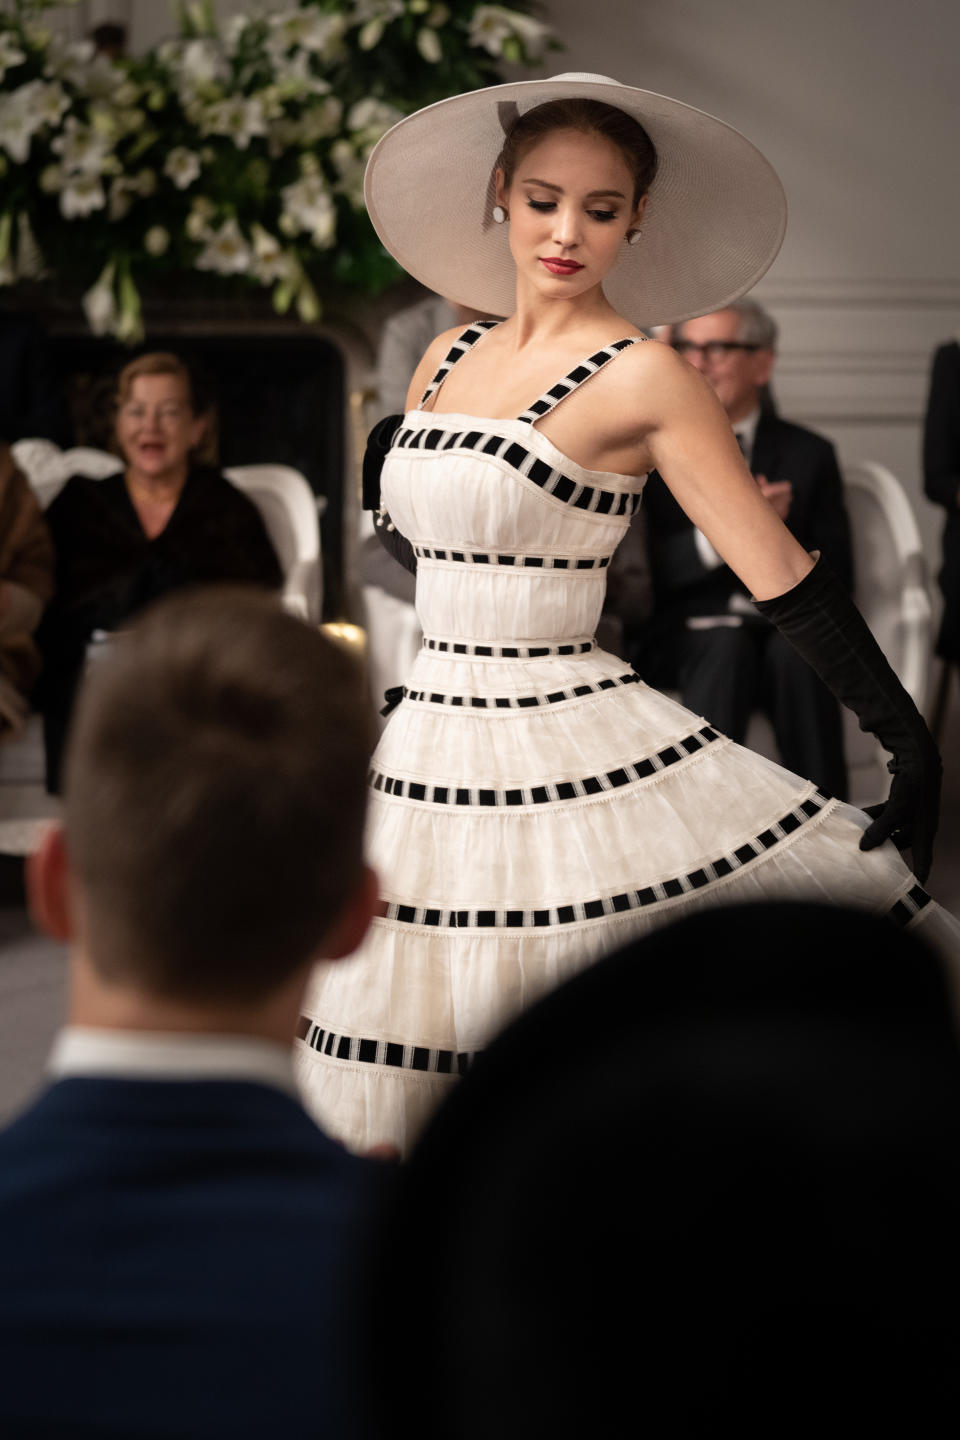 Alba Baptista stars as Natasha modeling the Vaudeville dress from the Christian Dior show in “Mrs. Harris Goes to Paris.” - Credit: David Lukacs